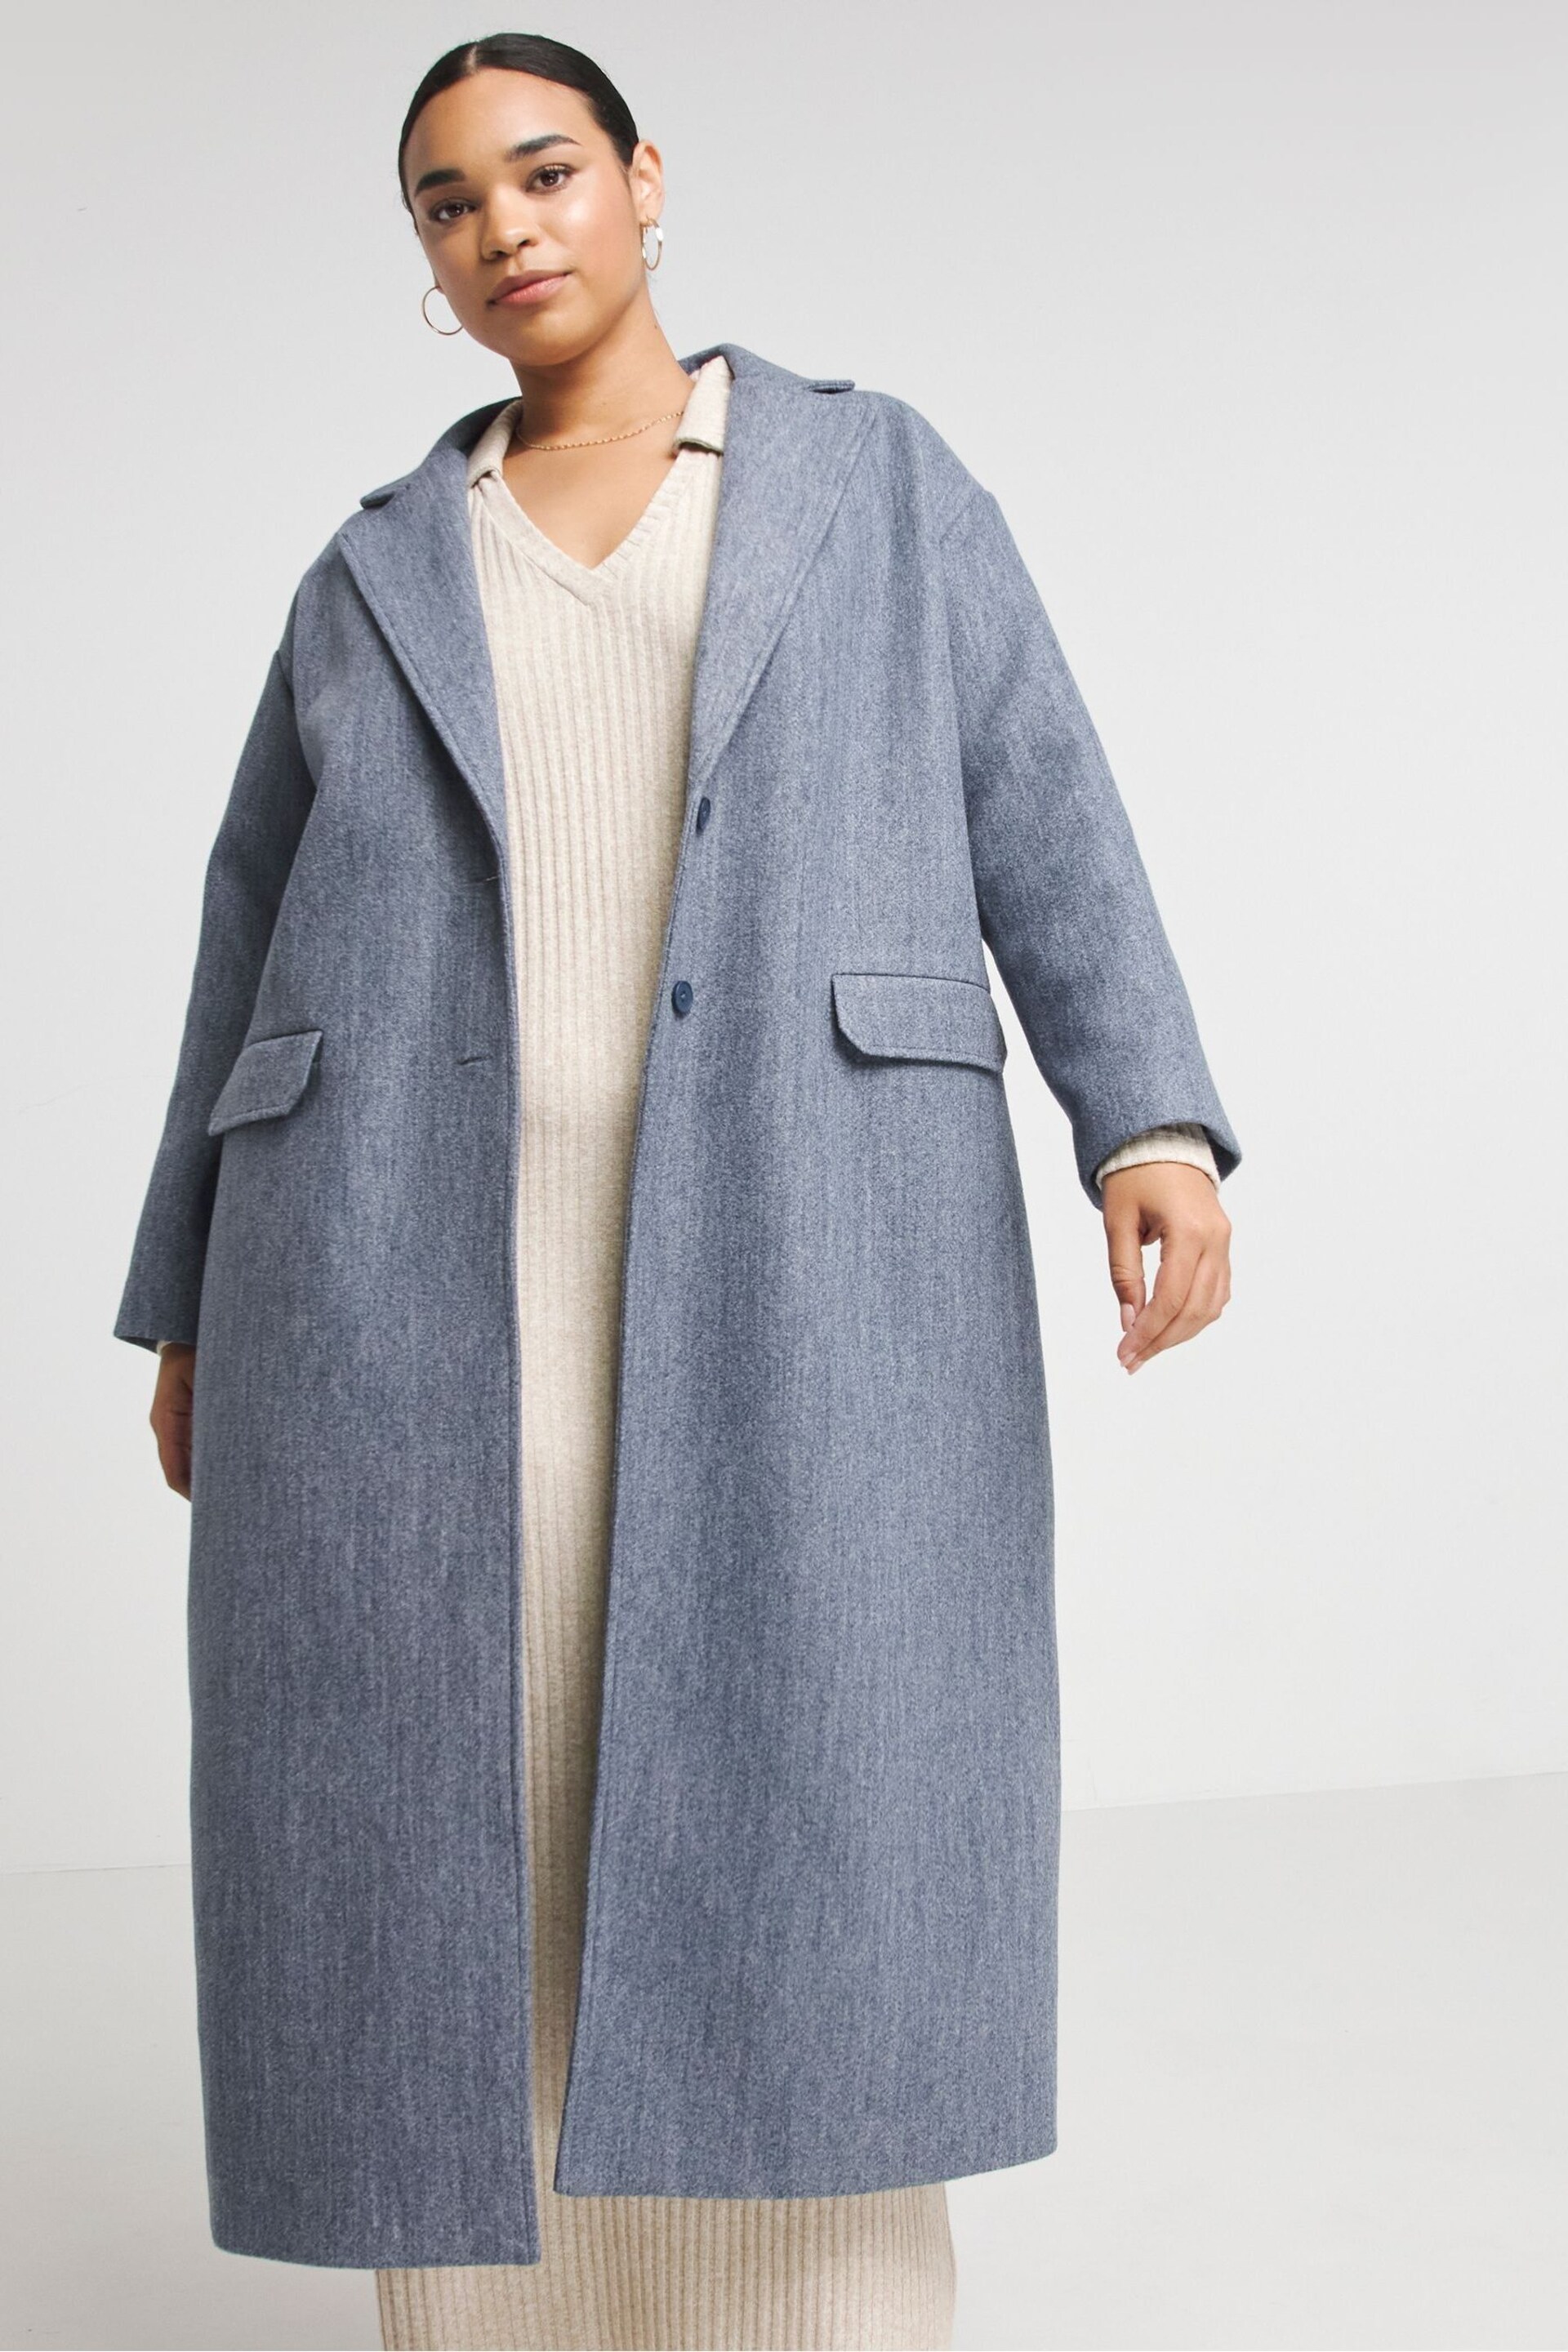 Simply Be Blue Denim Faux Fur Wool Maxi Formal Jacket - Image 1 of 4